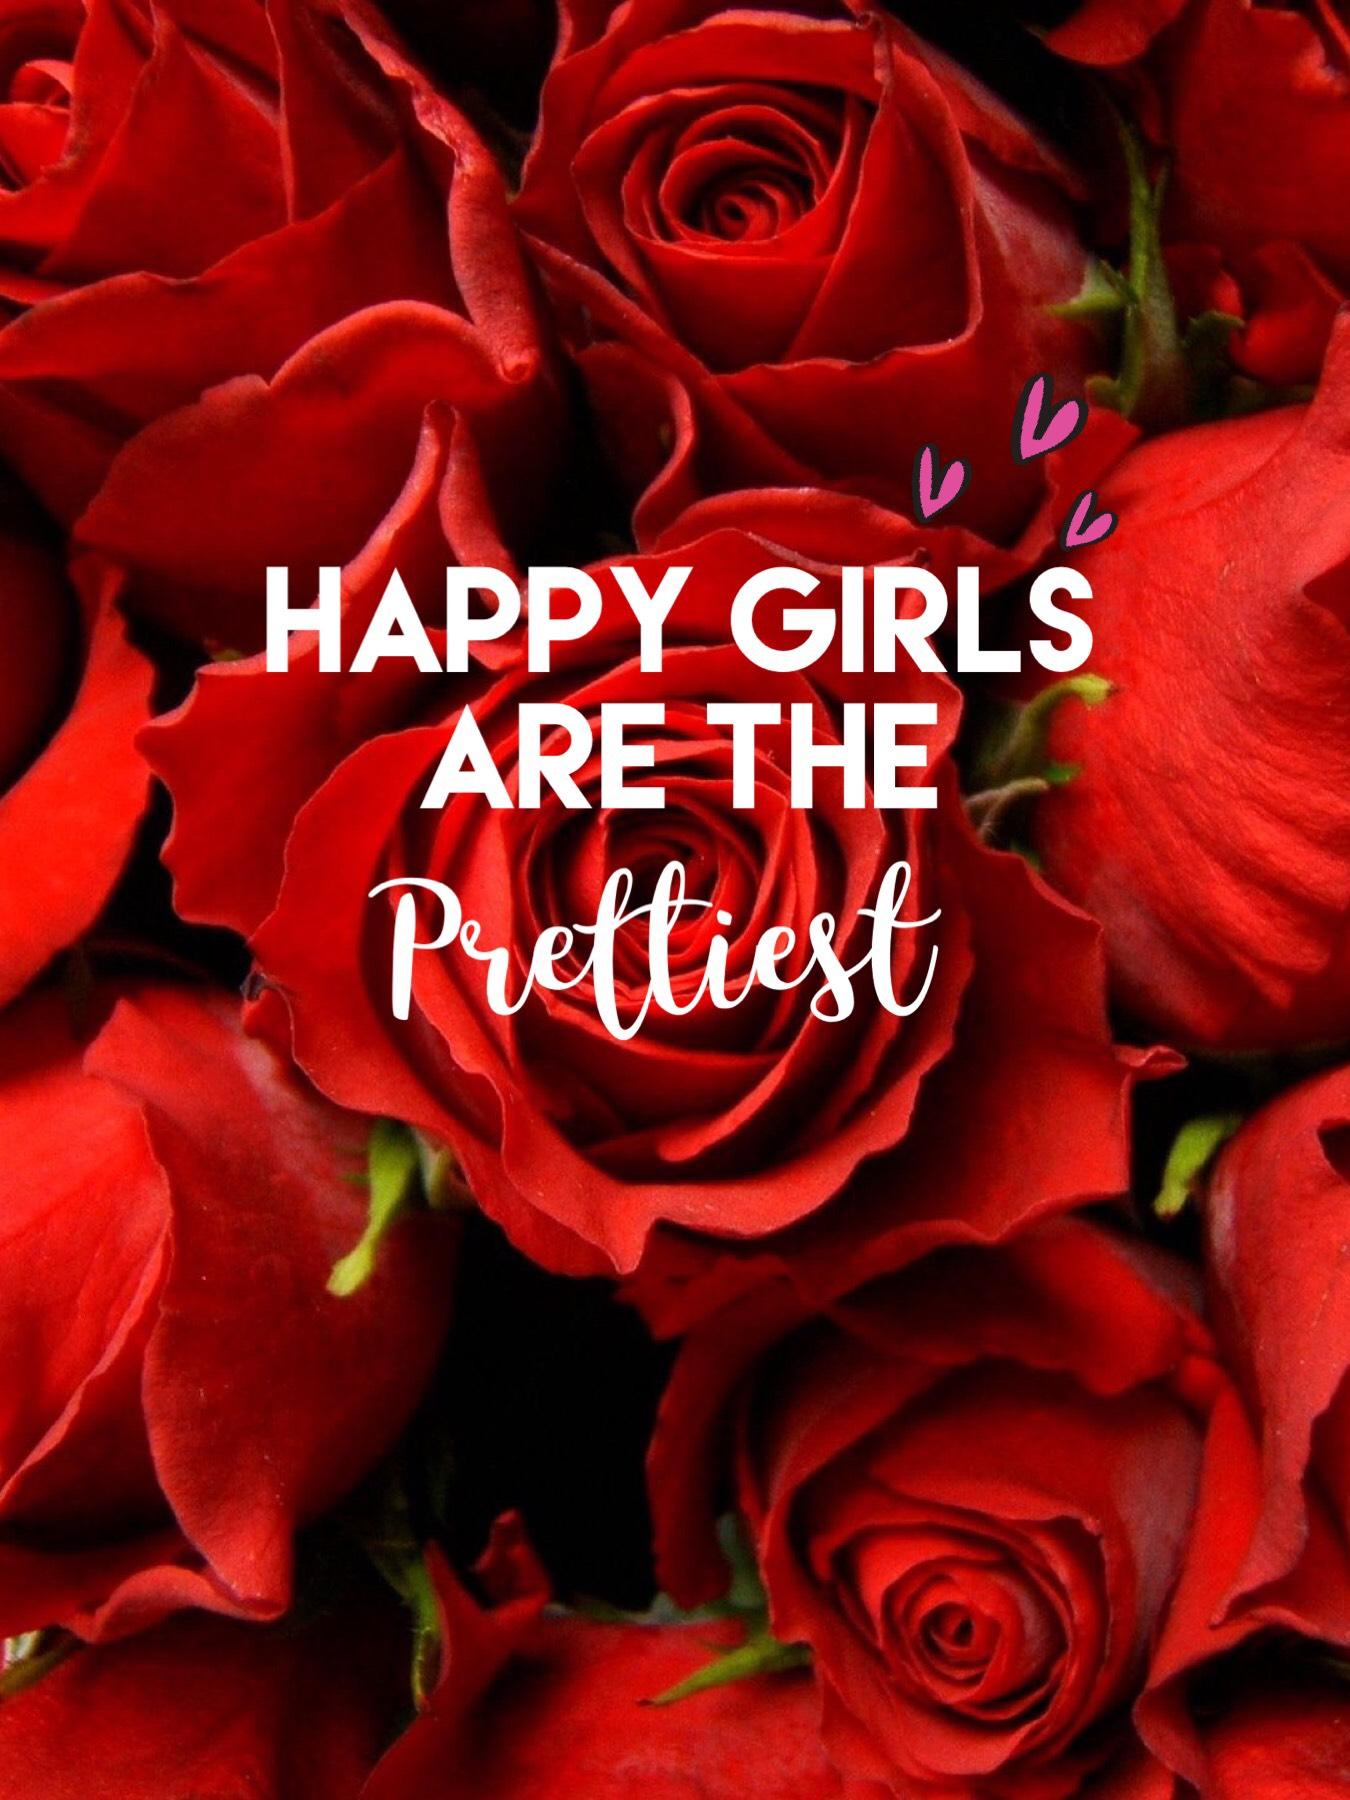 Happy girls are the prettiest